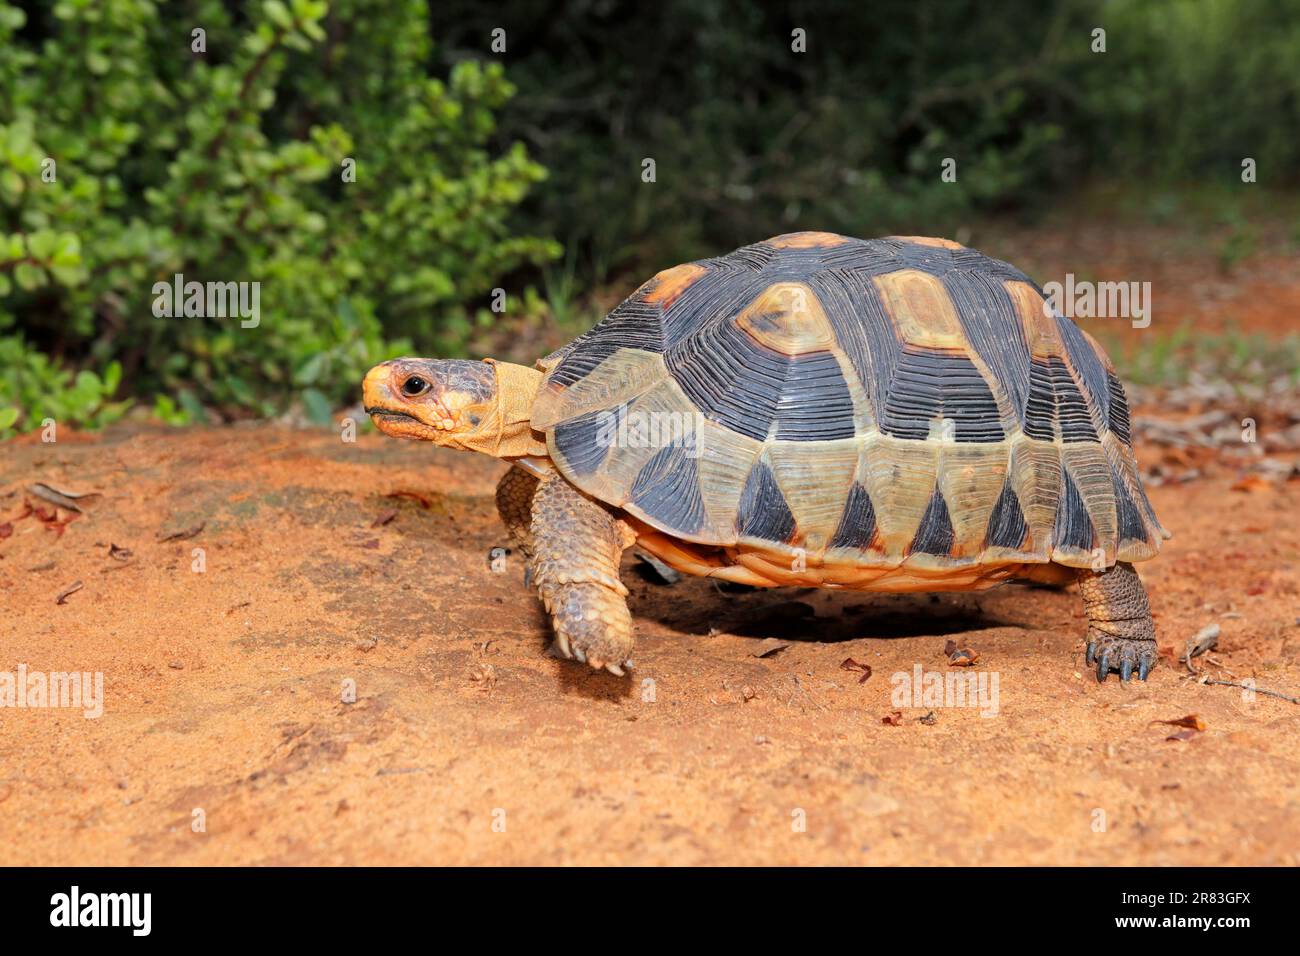 Una piccola tartaruga angolata (Chersina angulata) in habitat naturale, Sudafrica Foto Stock